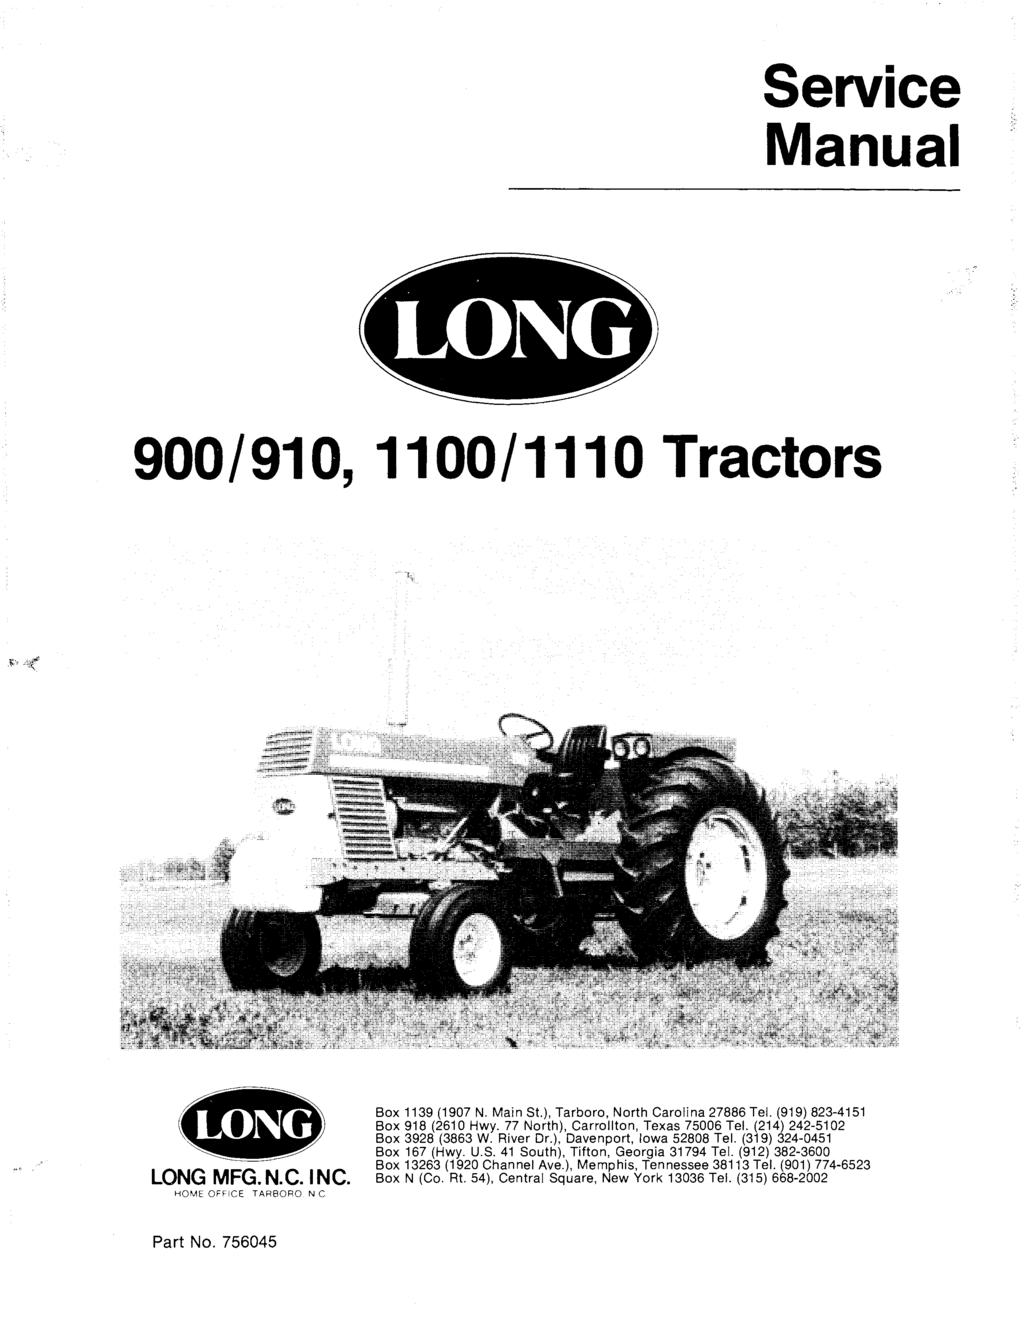 Service Manual. LONG 900/910, 1100/1110 Tractors - LONG MFG. N.C. INC. HOME OFFICE TARBORO N C Box 1139 (1907 N. Main St.), Tarboro, North Carolina 27886 Tel. (919) 823-4151 Box 918 (2610 Hwy.